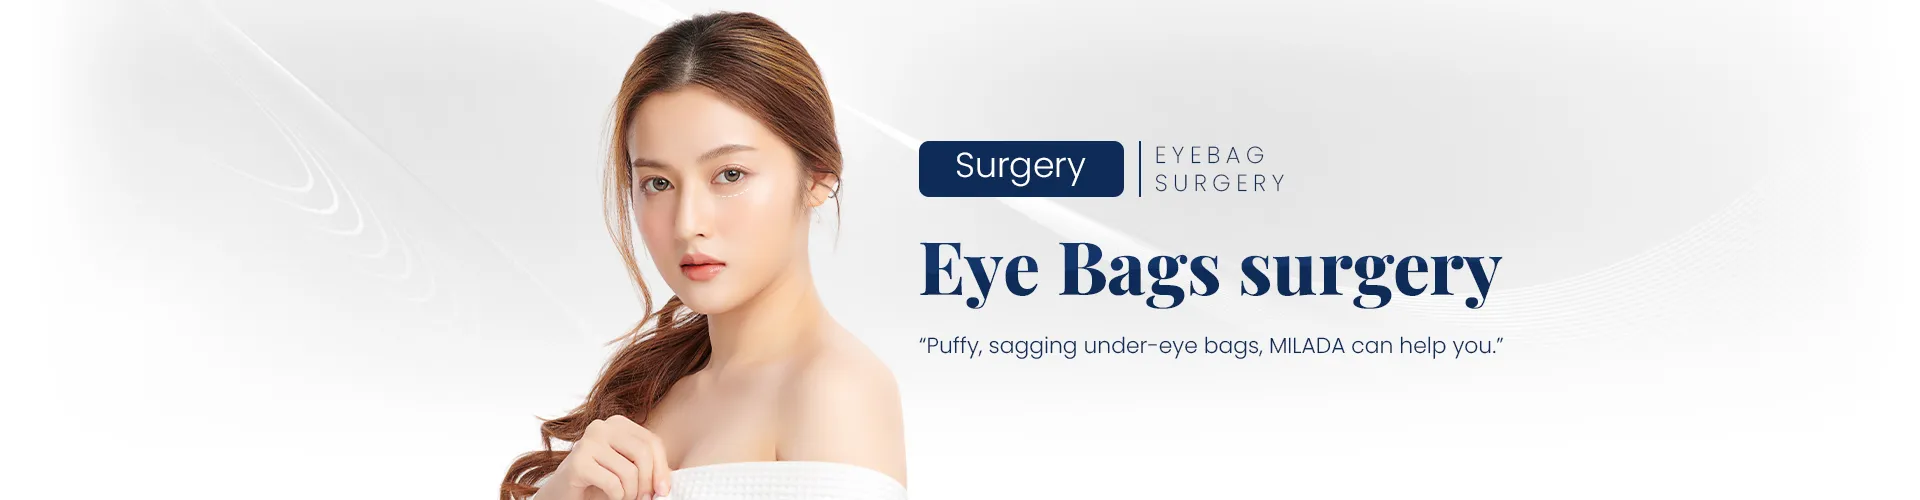 Under-eye bag surgery | Milada Plastic Surgery Hospital 